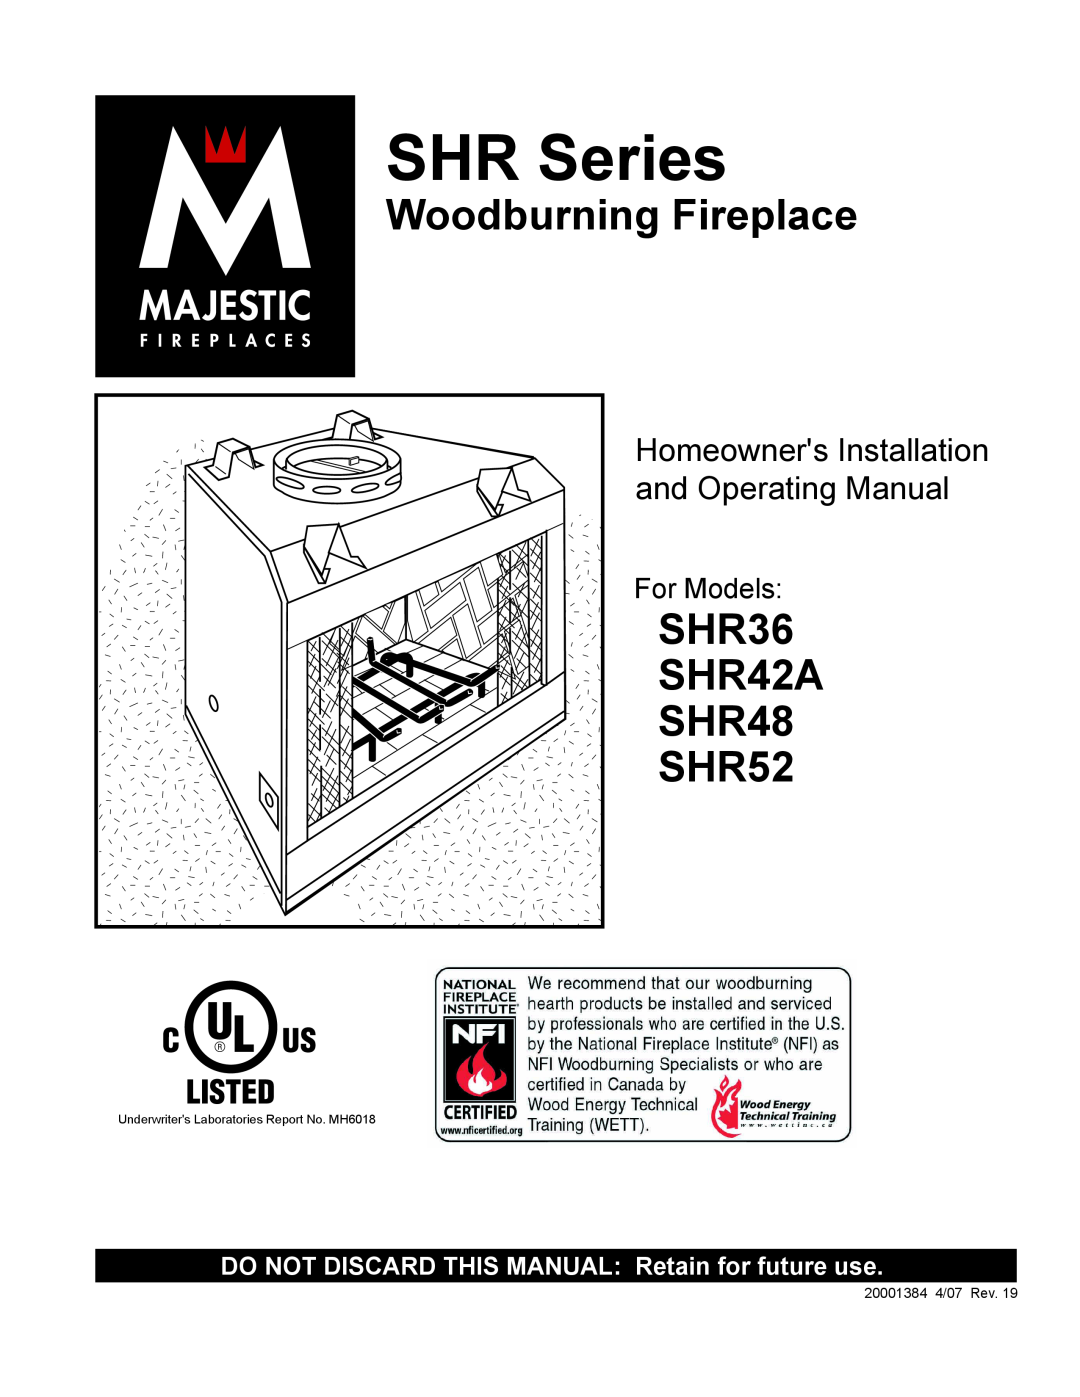 CFM Corporation SHR42A manual Woodburning Fireplace, SHR36, SHR48, SHR52, and Operating Manual, SHR Series, For Models 